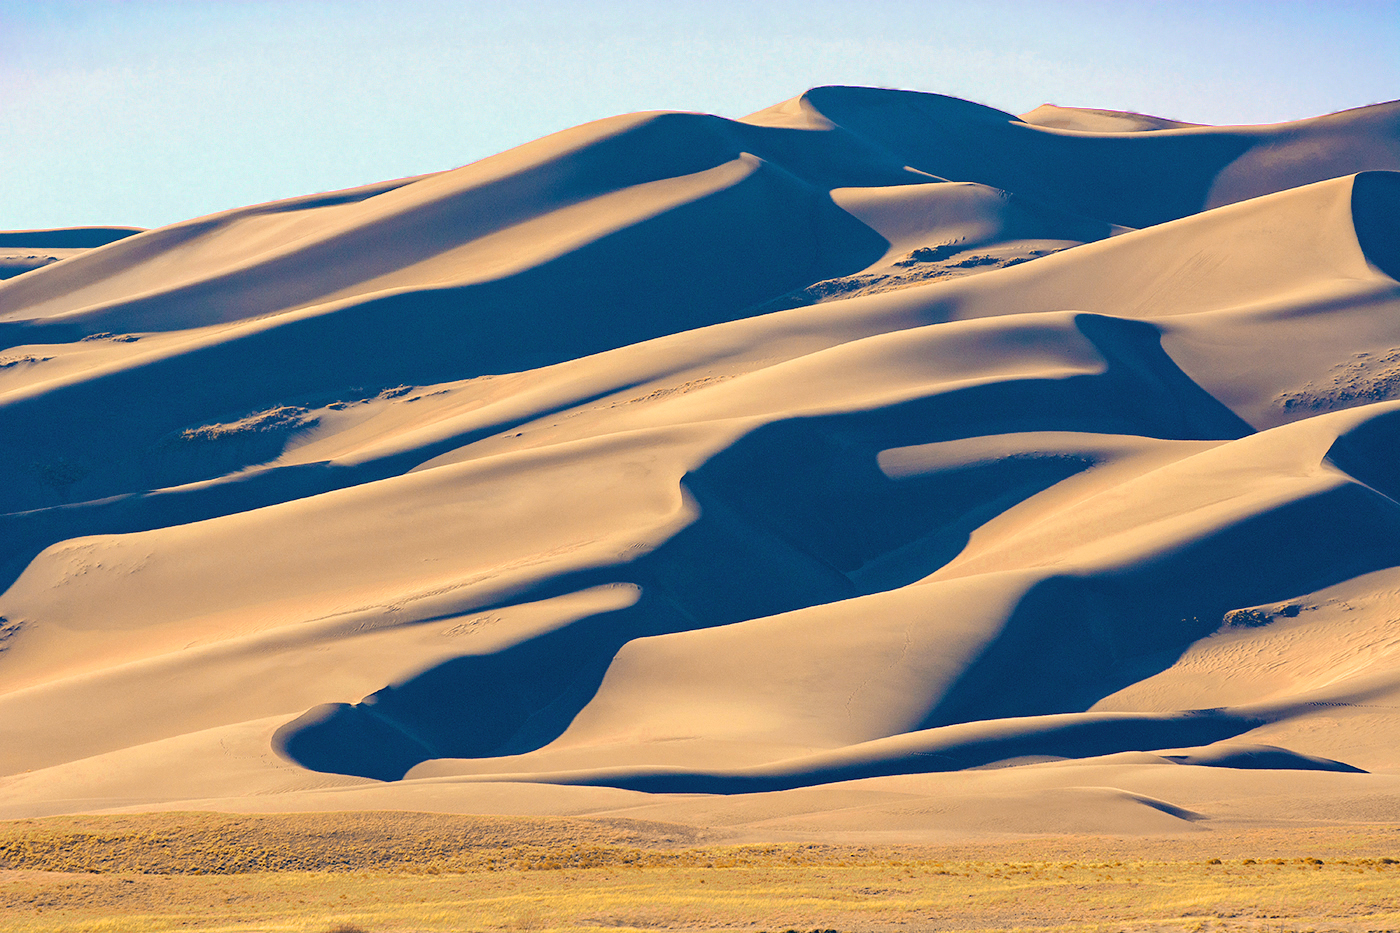 Sketch The Dunes Great Sand Dunes National Park Preserve U S National Park Service